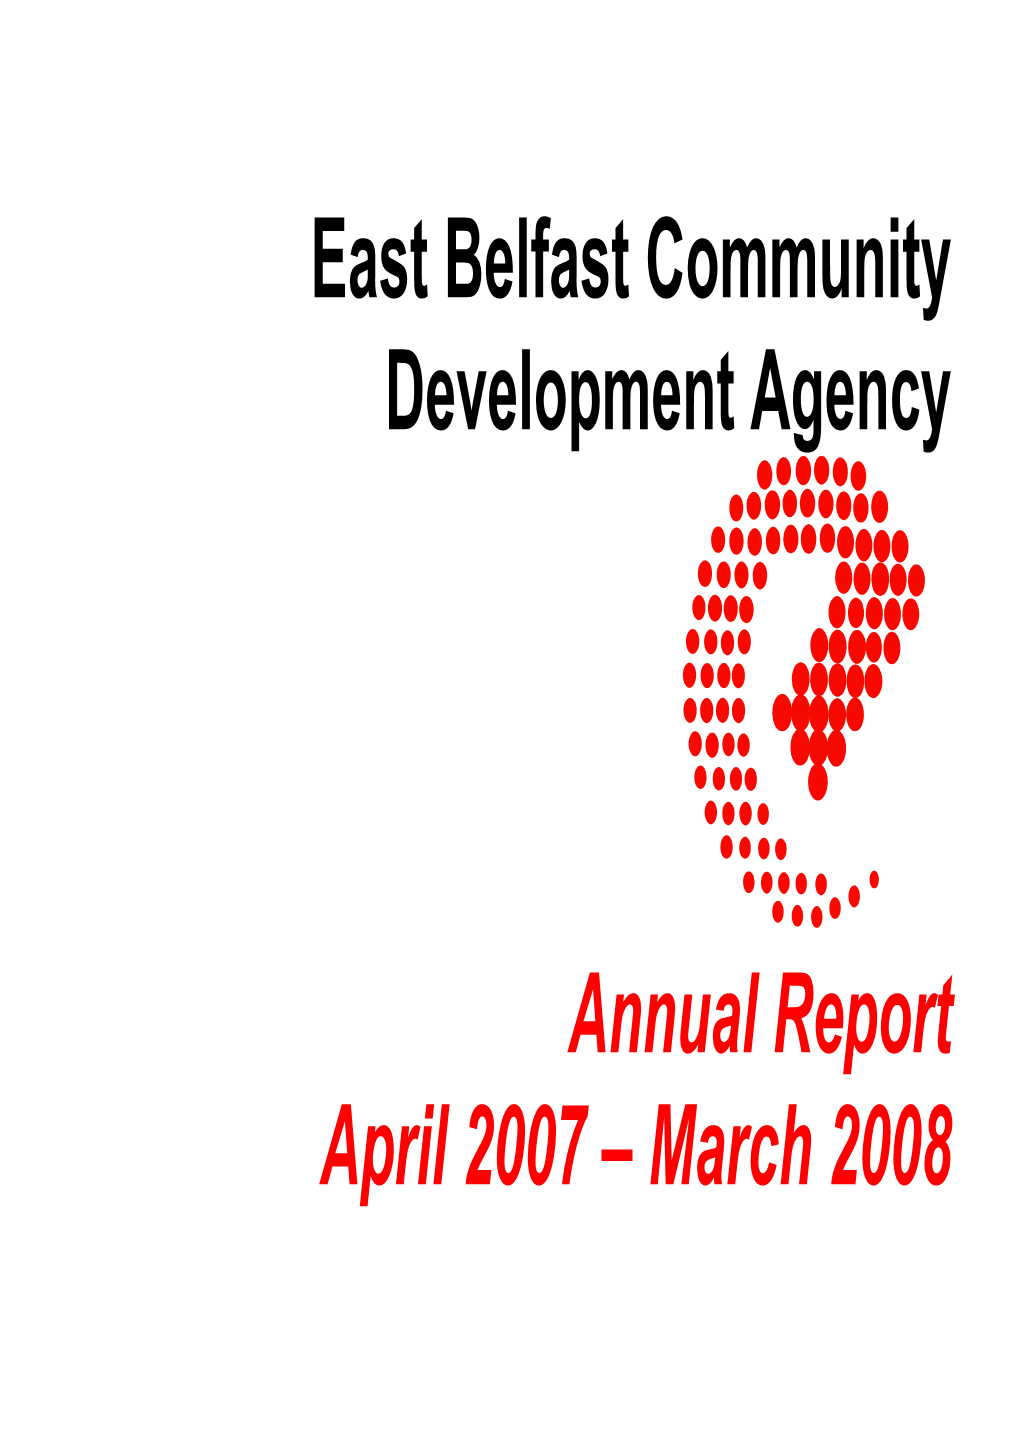 EBCDA Annual Report 2007-2008